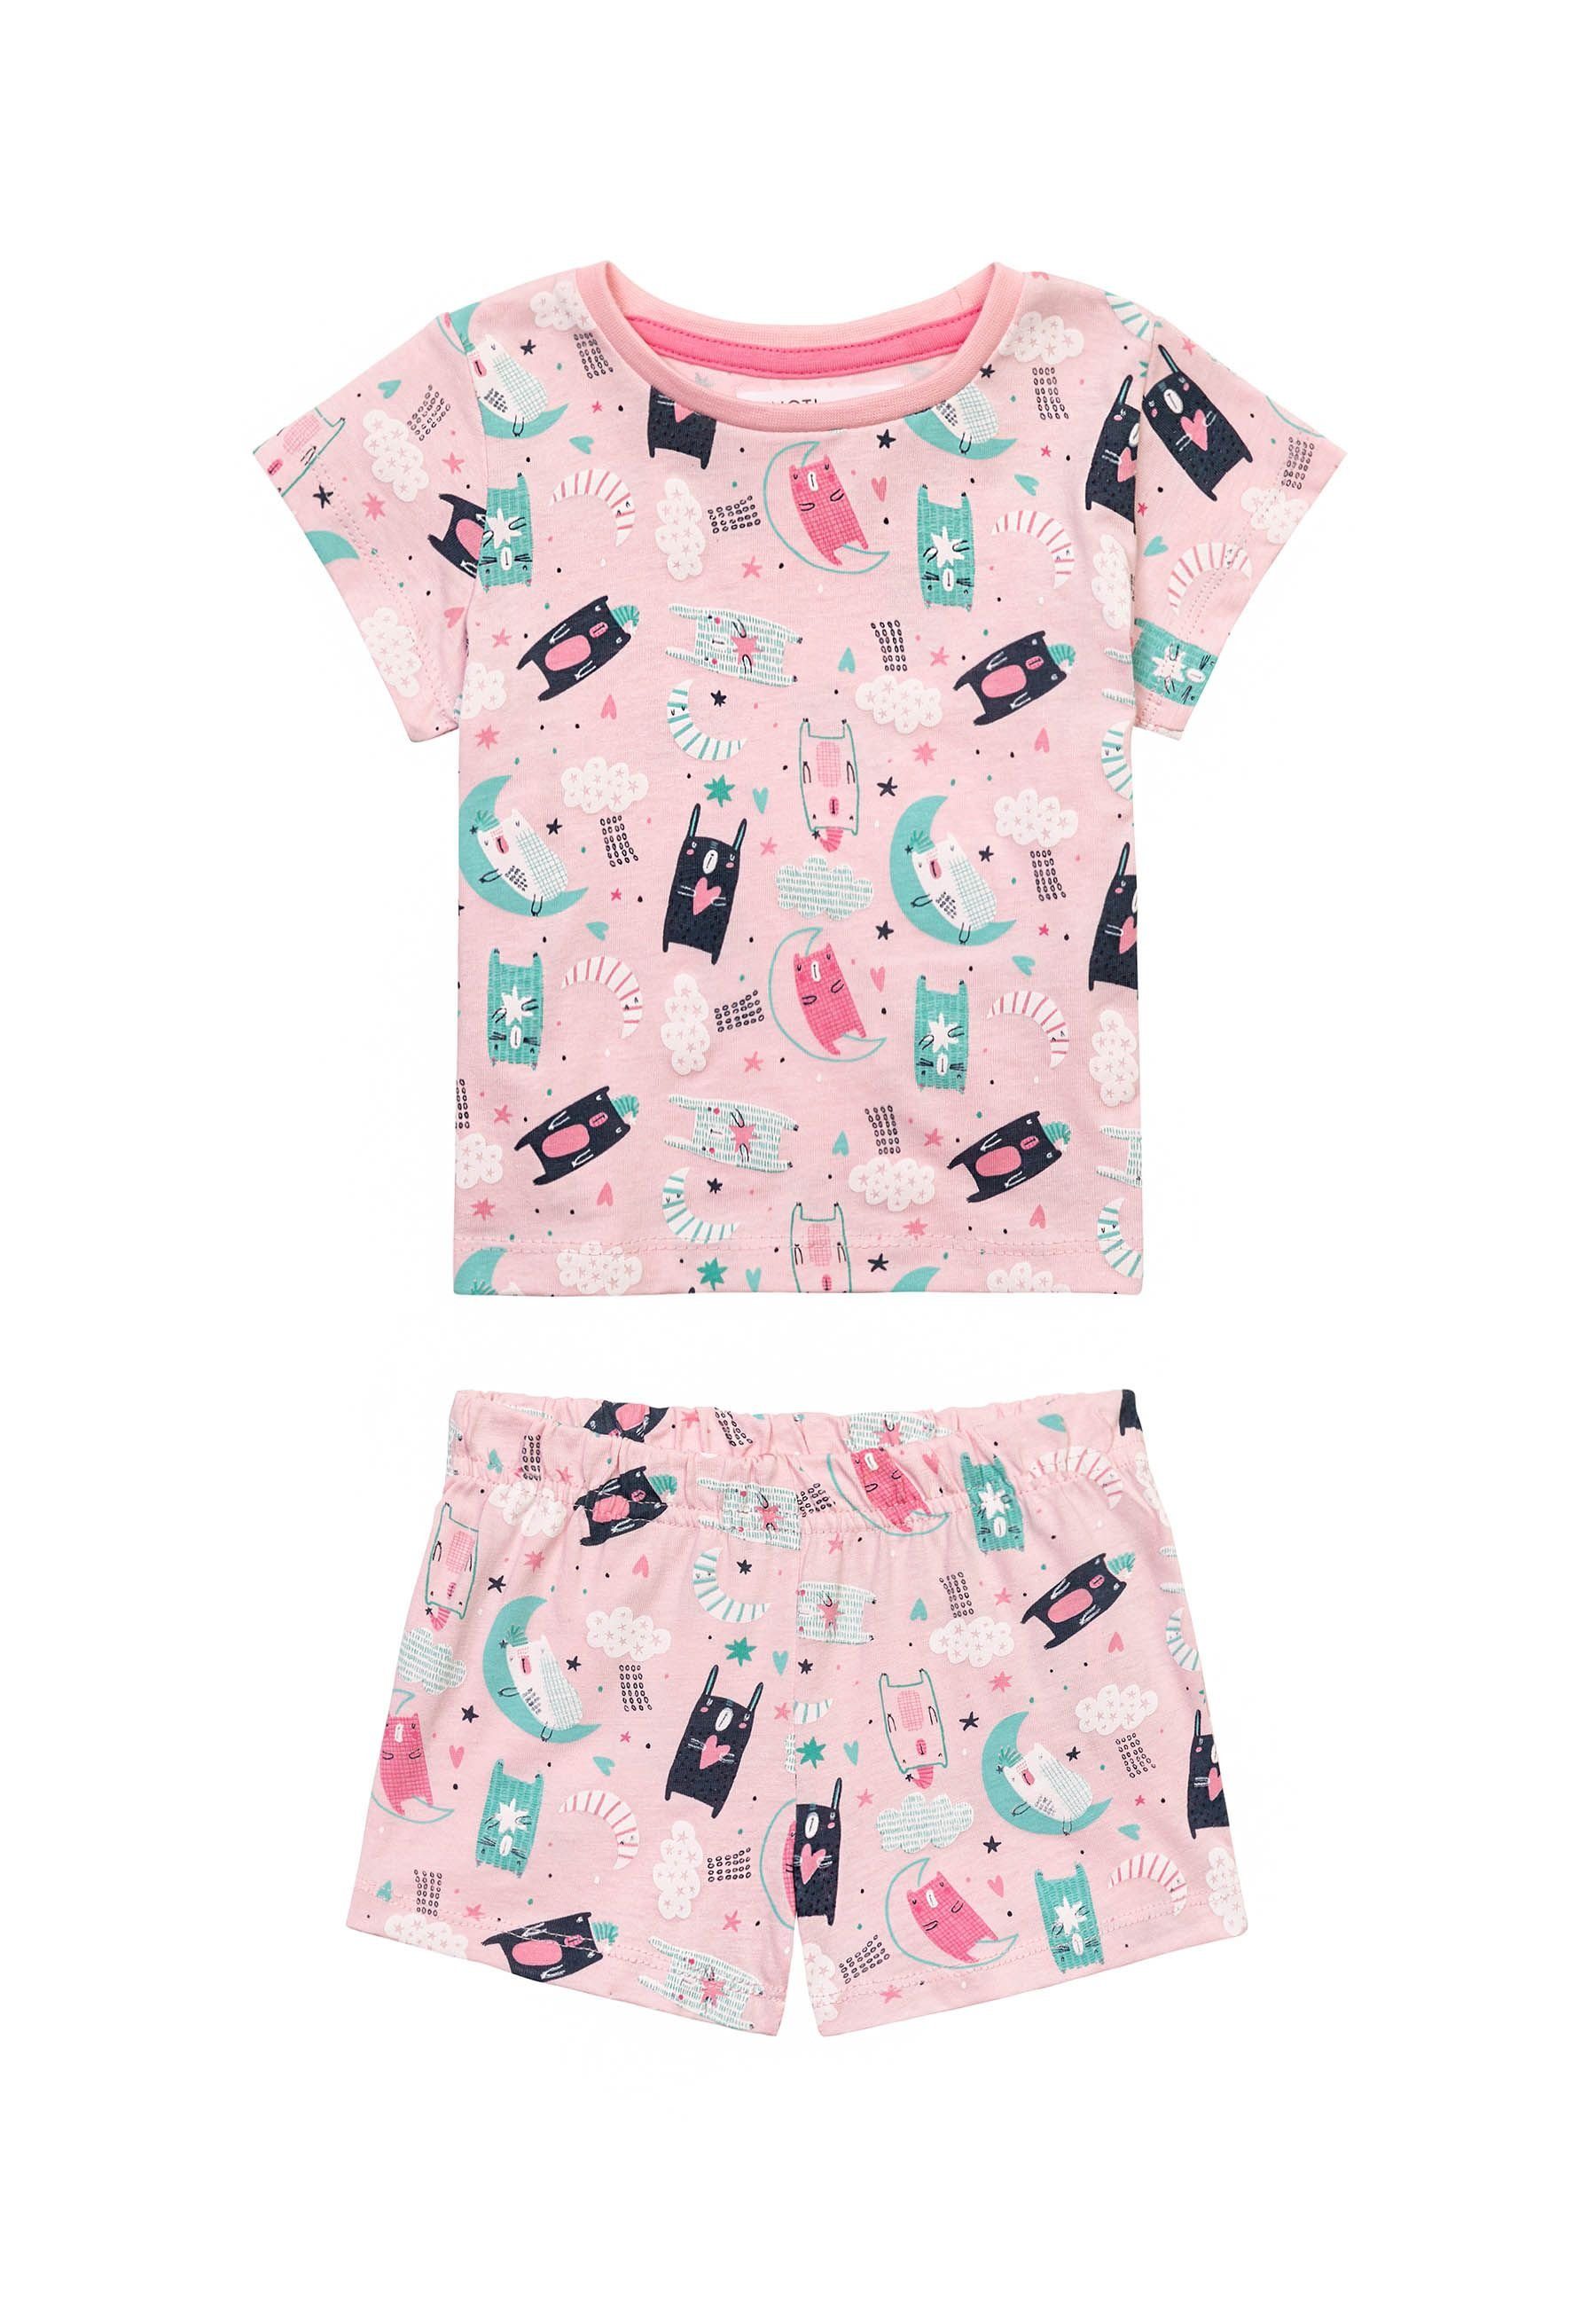 MINOTI Pyjama Rosa (1y-8y) Schlafanzug Sommer